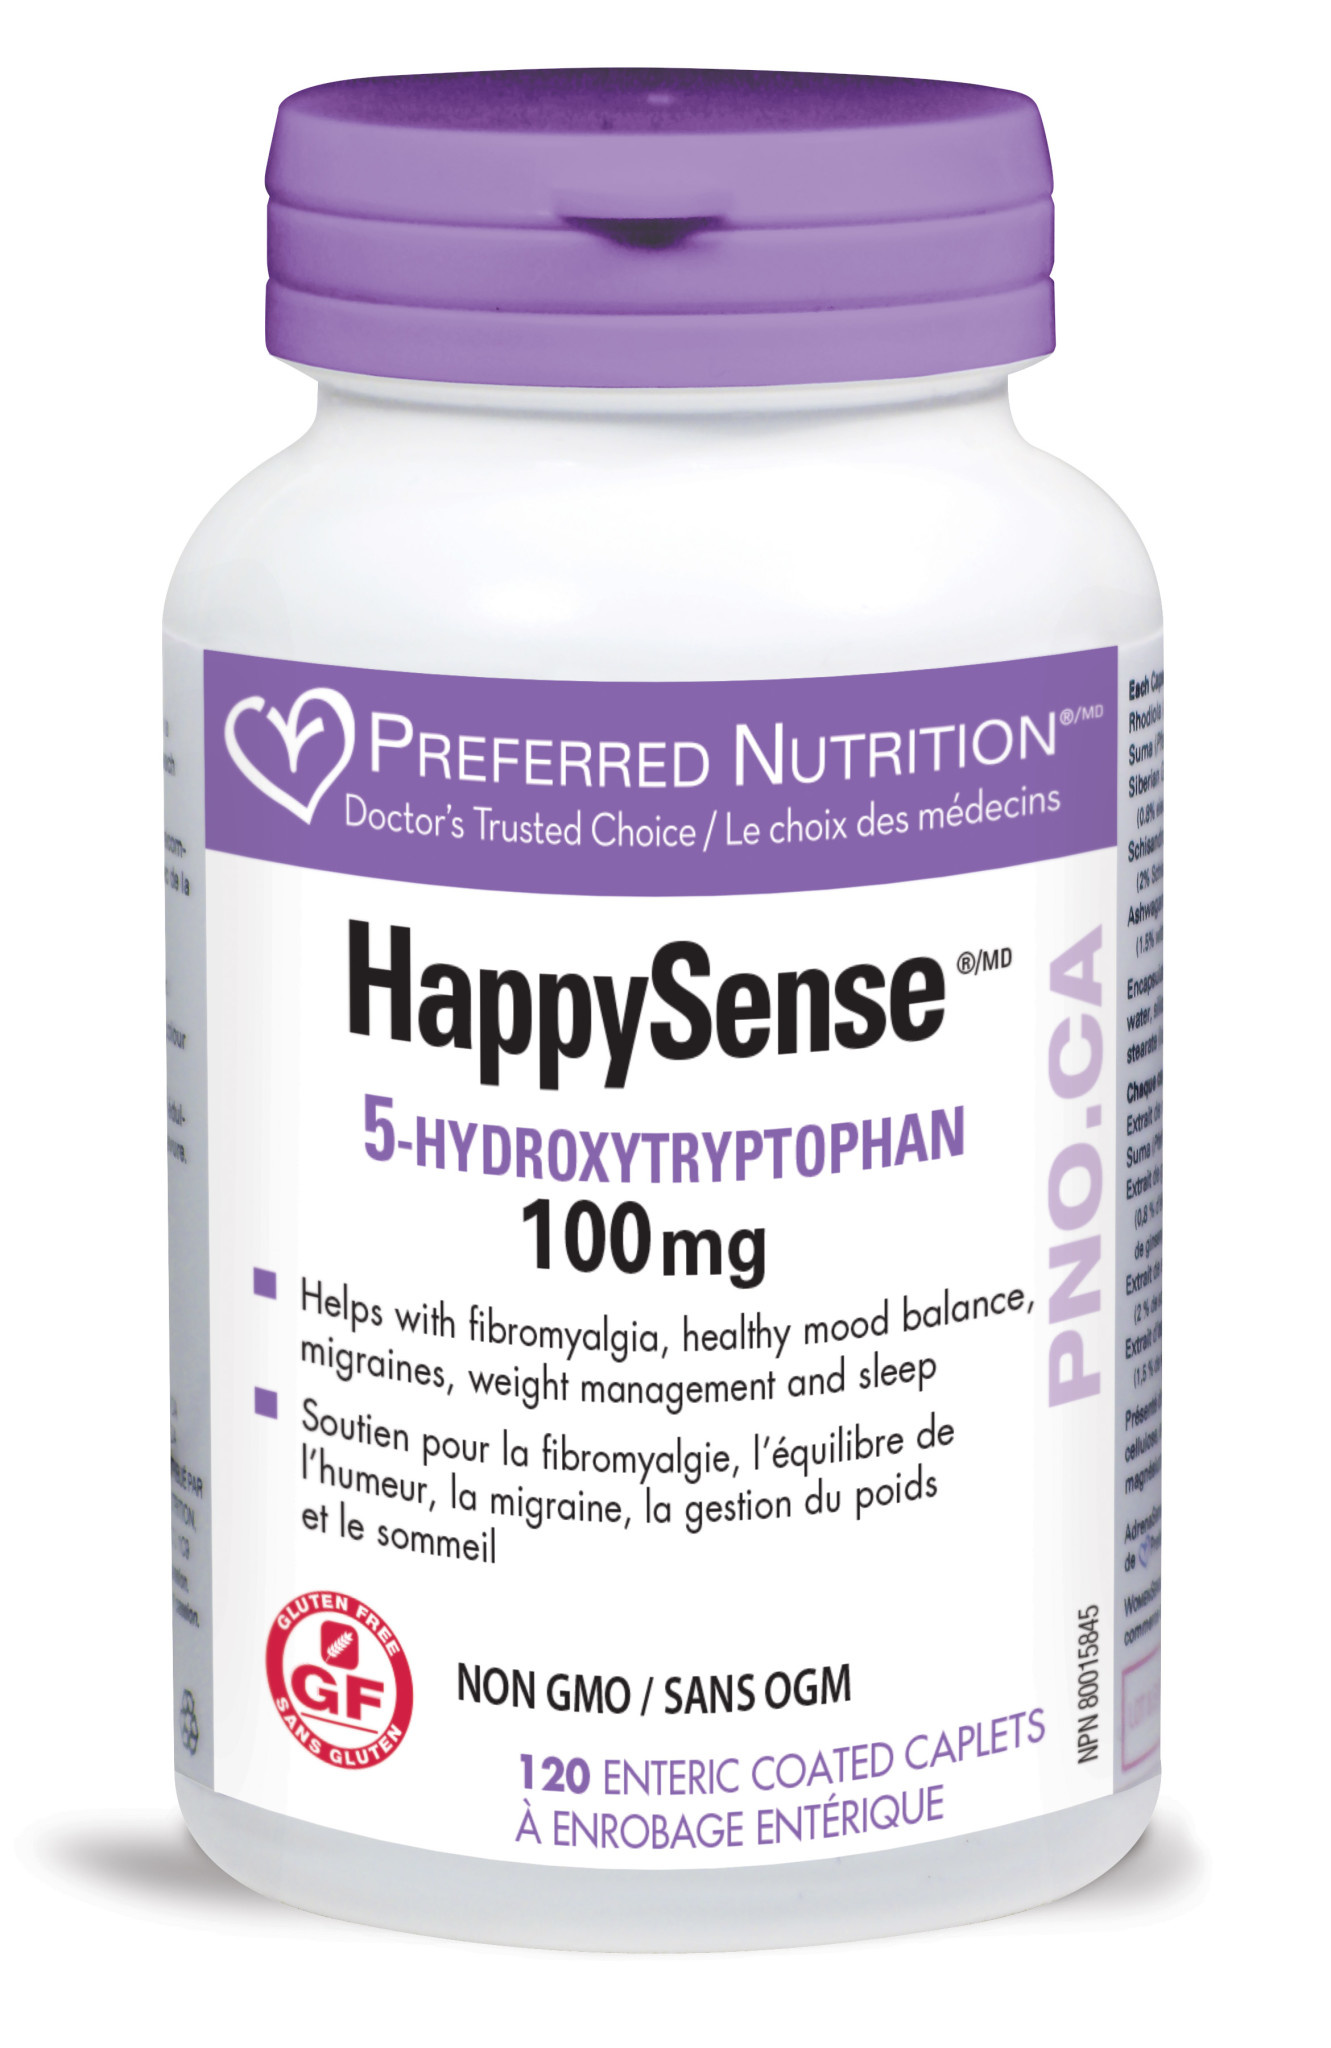 Preferred Nutrition - HappySense - 100mg -120 EC Caplets